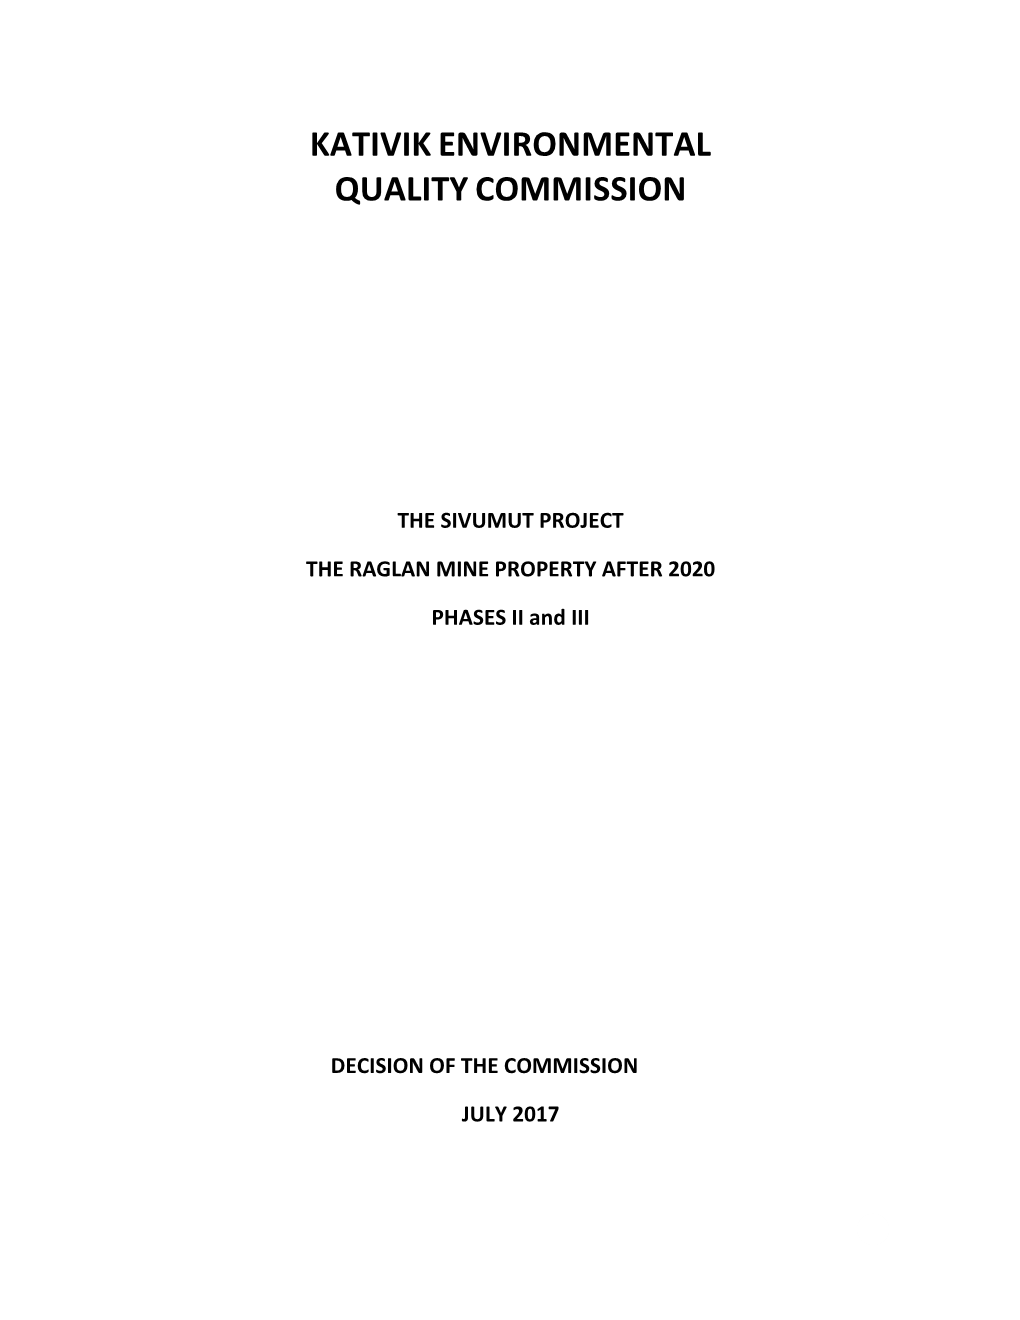 Kativikenvironmental Qualitycommission